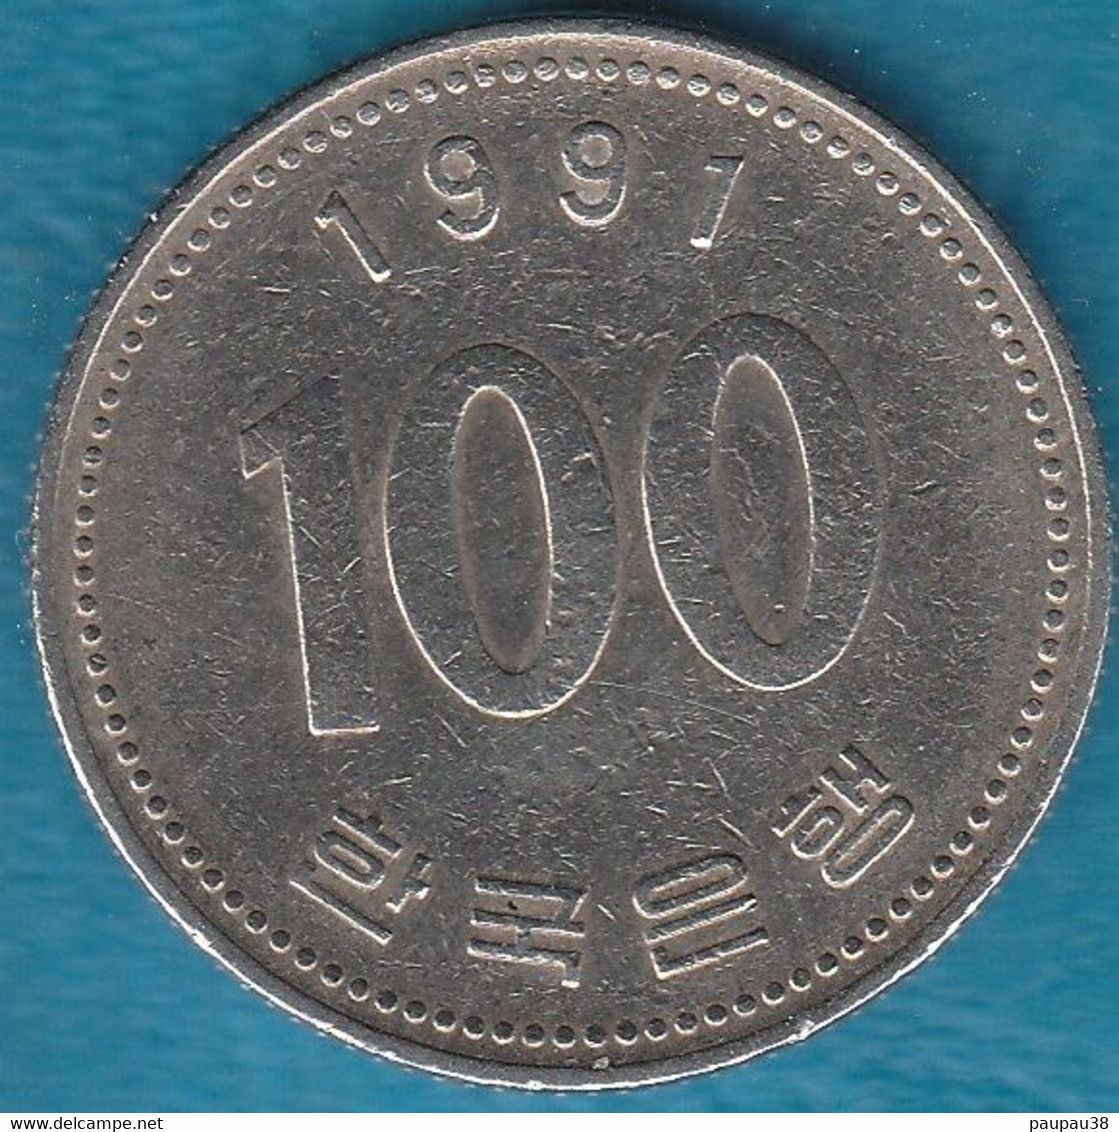 N° 4 - COREE 100 WON 1991 - Corea Del Norte